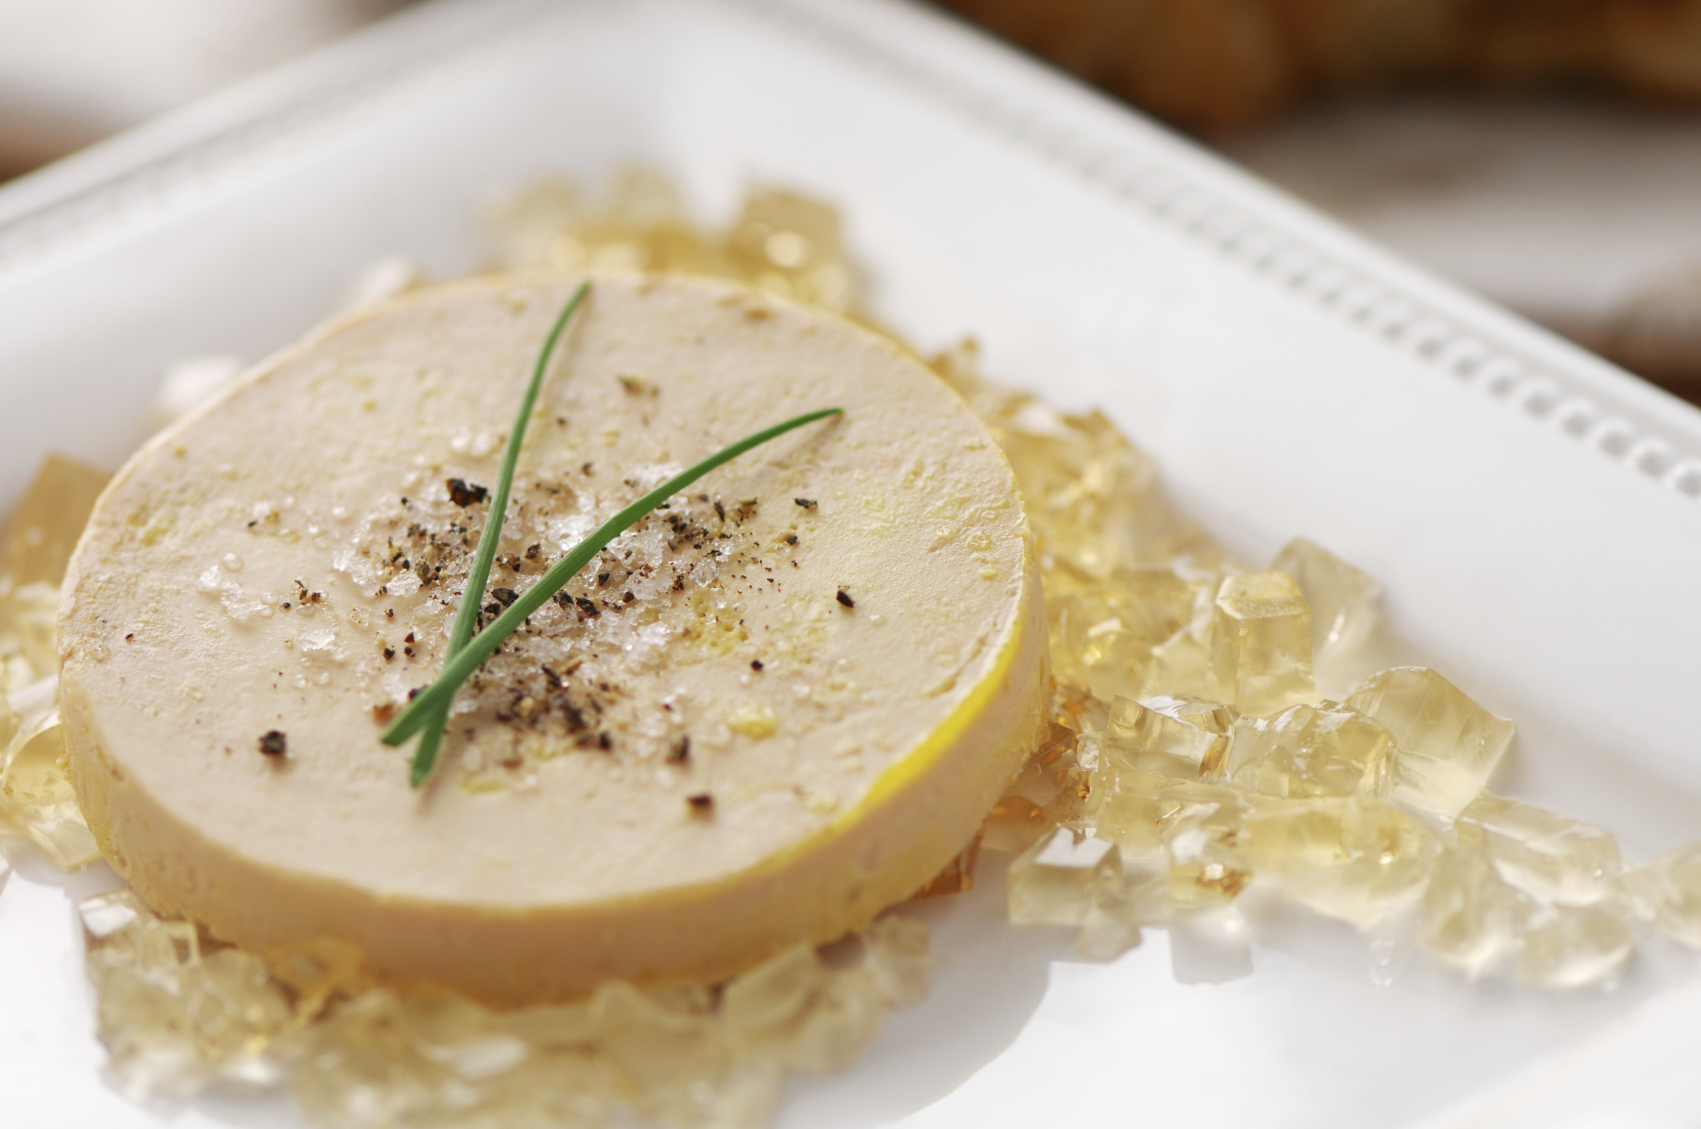 Foie Gras: The Indelicate Delicacy